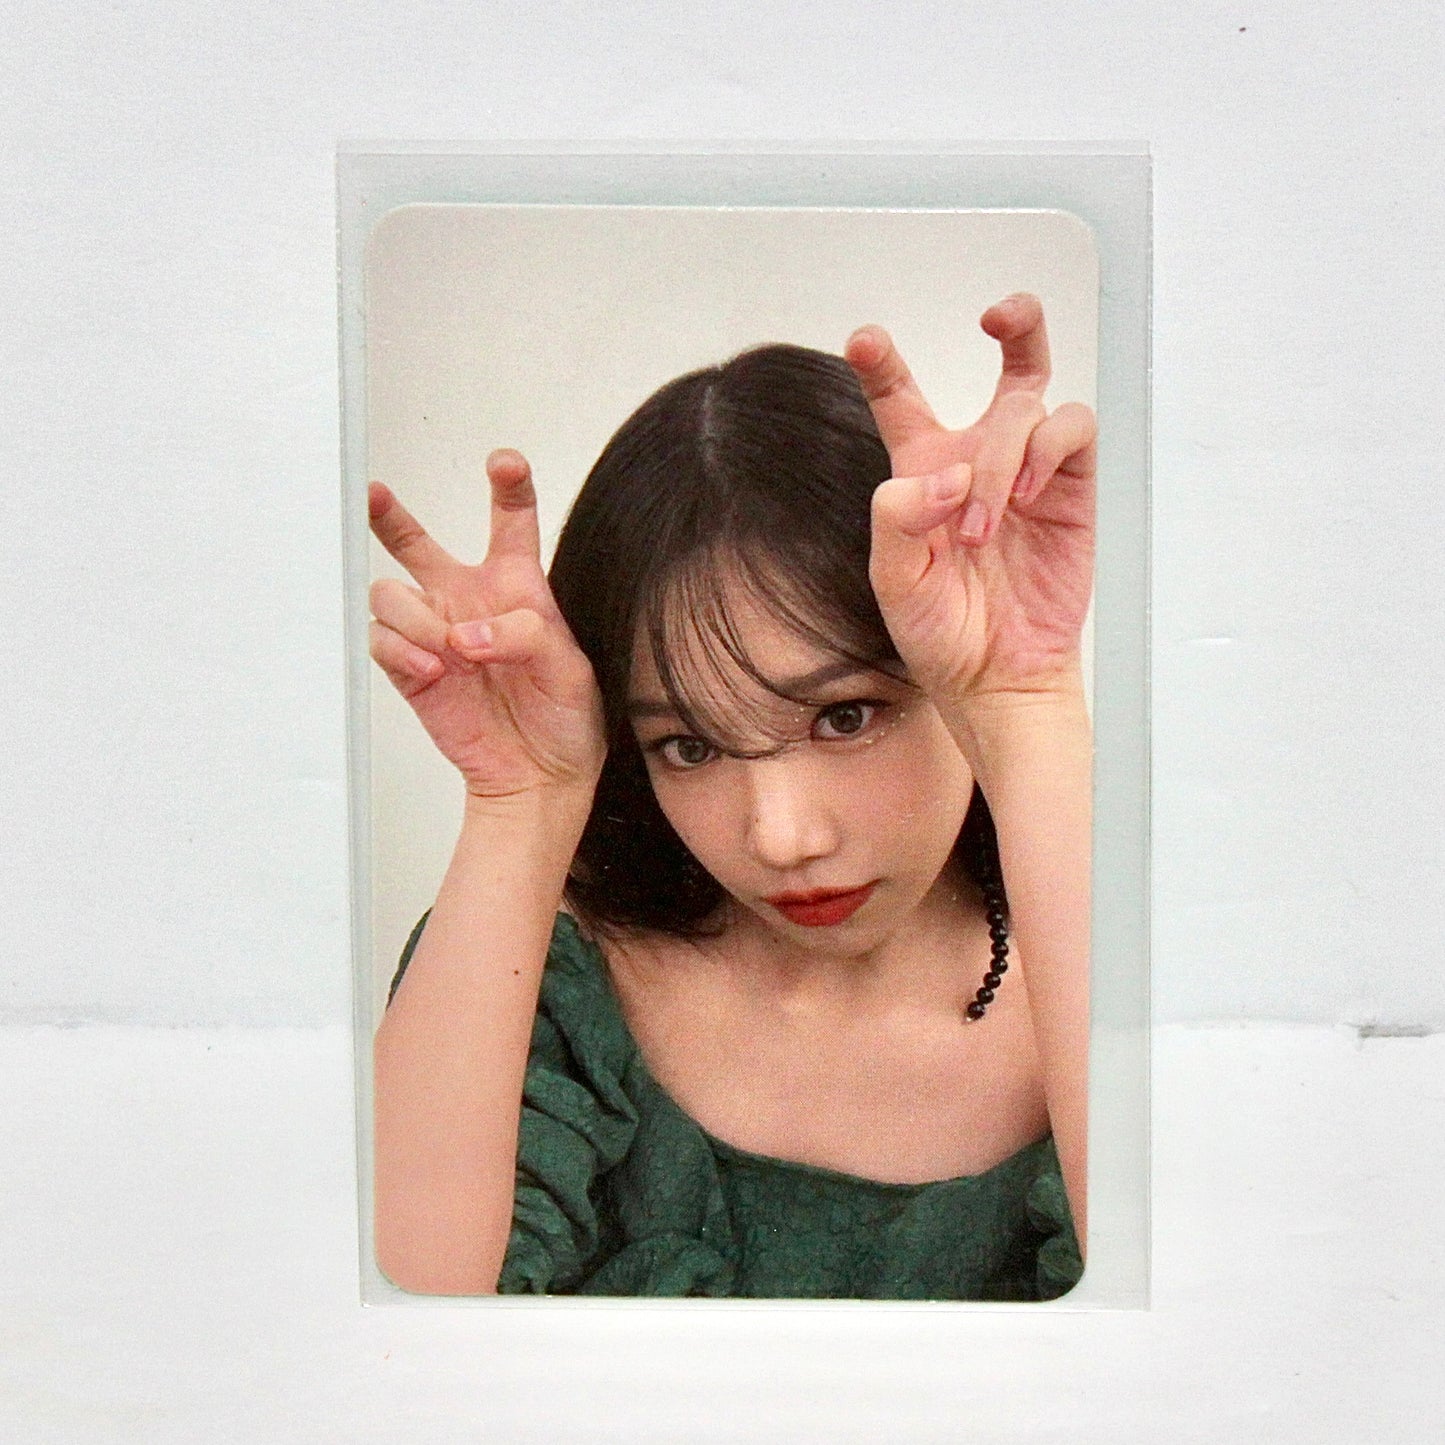 JO YURI 1st Mini Album - OP.22 Y-WALTZ : IN MAJOR | Inclusions